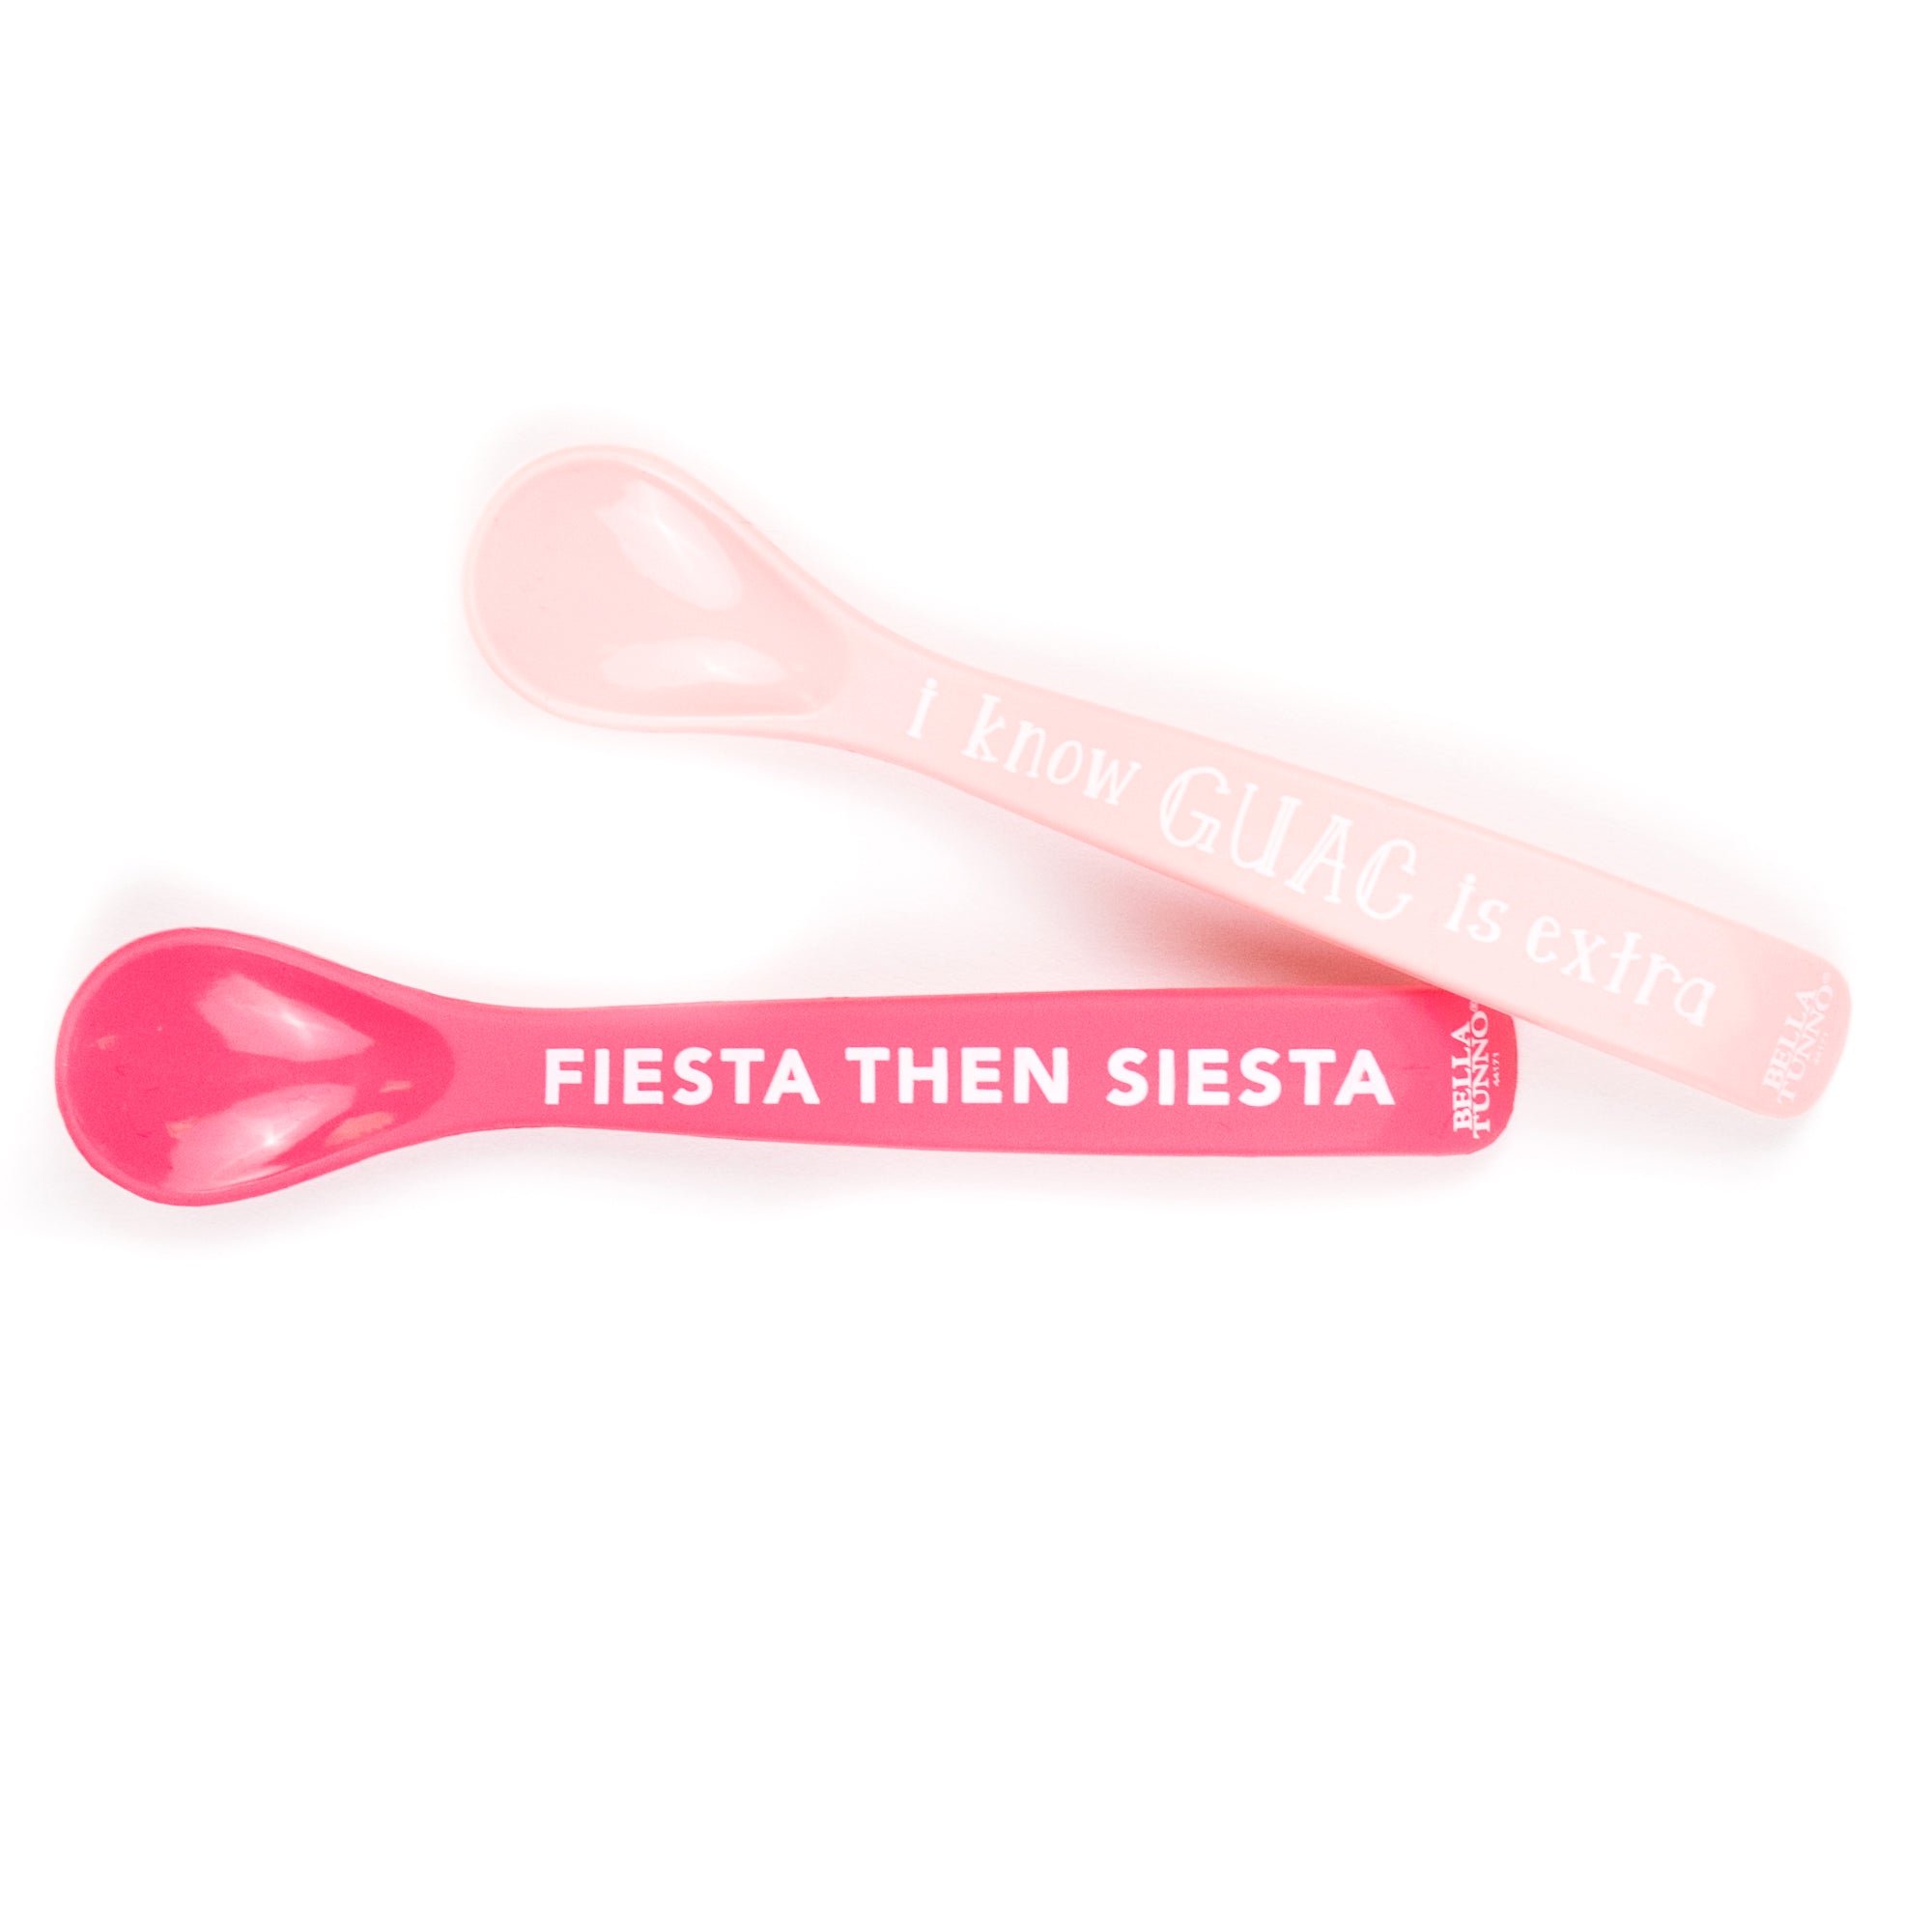 Guac is Extra/Fiesta then Siesta Spoon Set